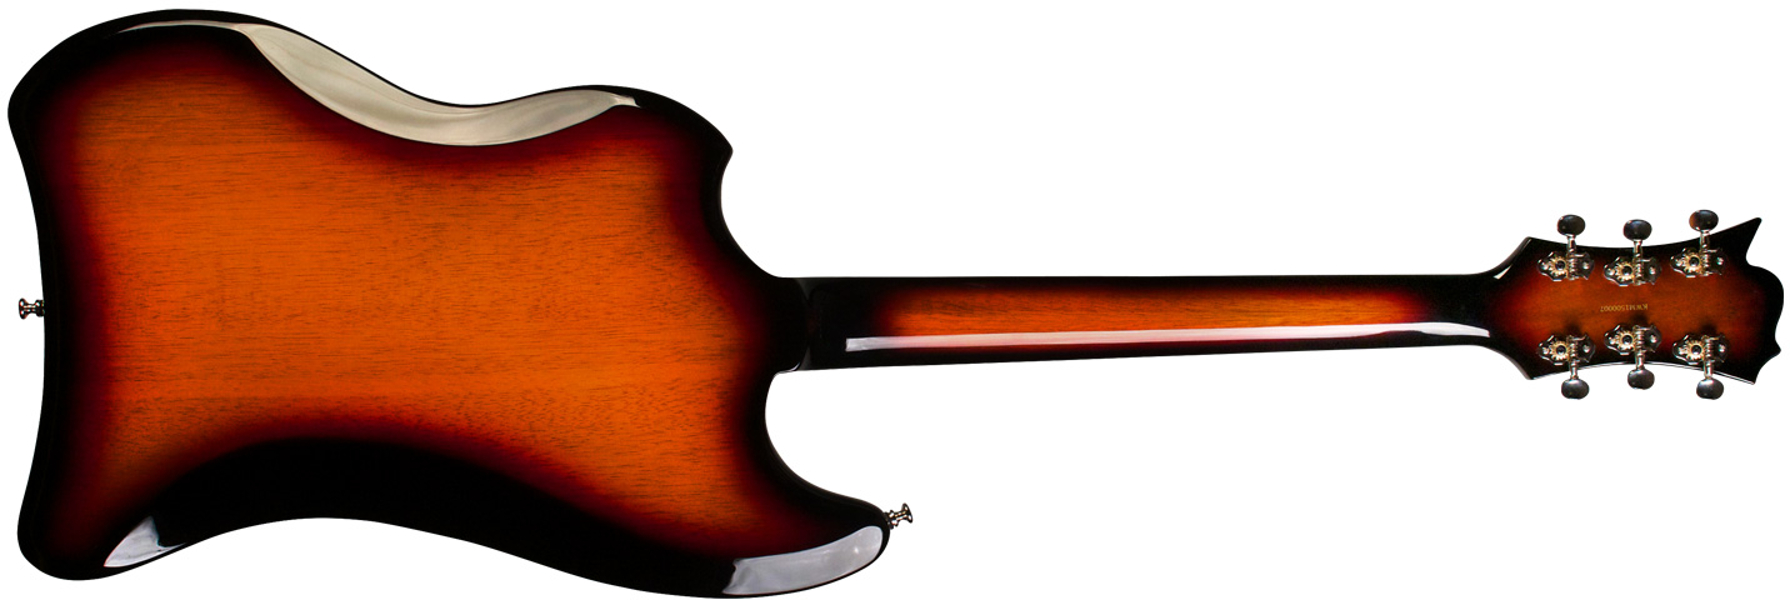 Guild S-200 T-bird - Antique Burst - Retro rock electric guitar - Variation 2